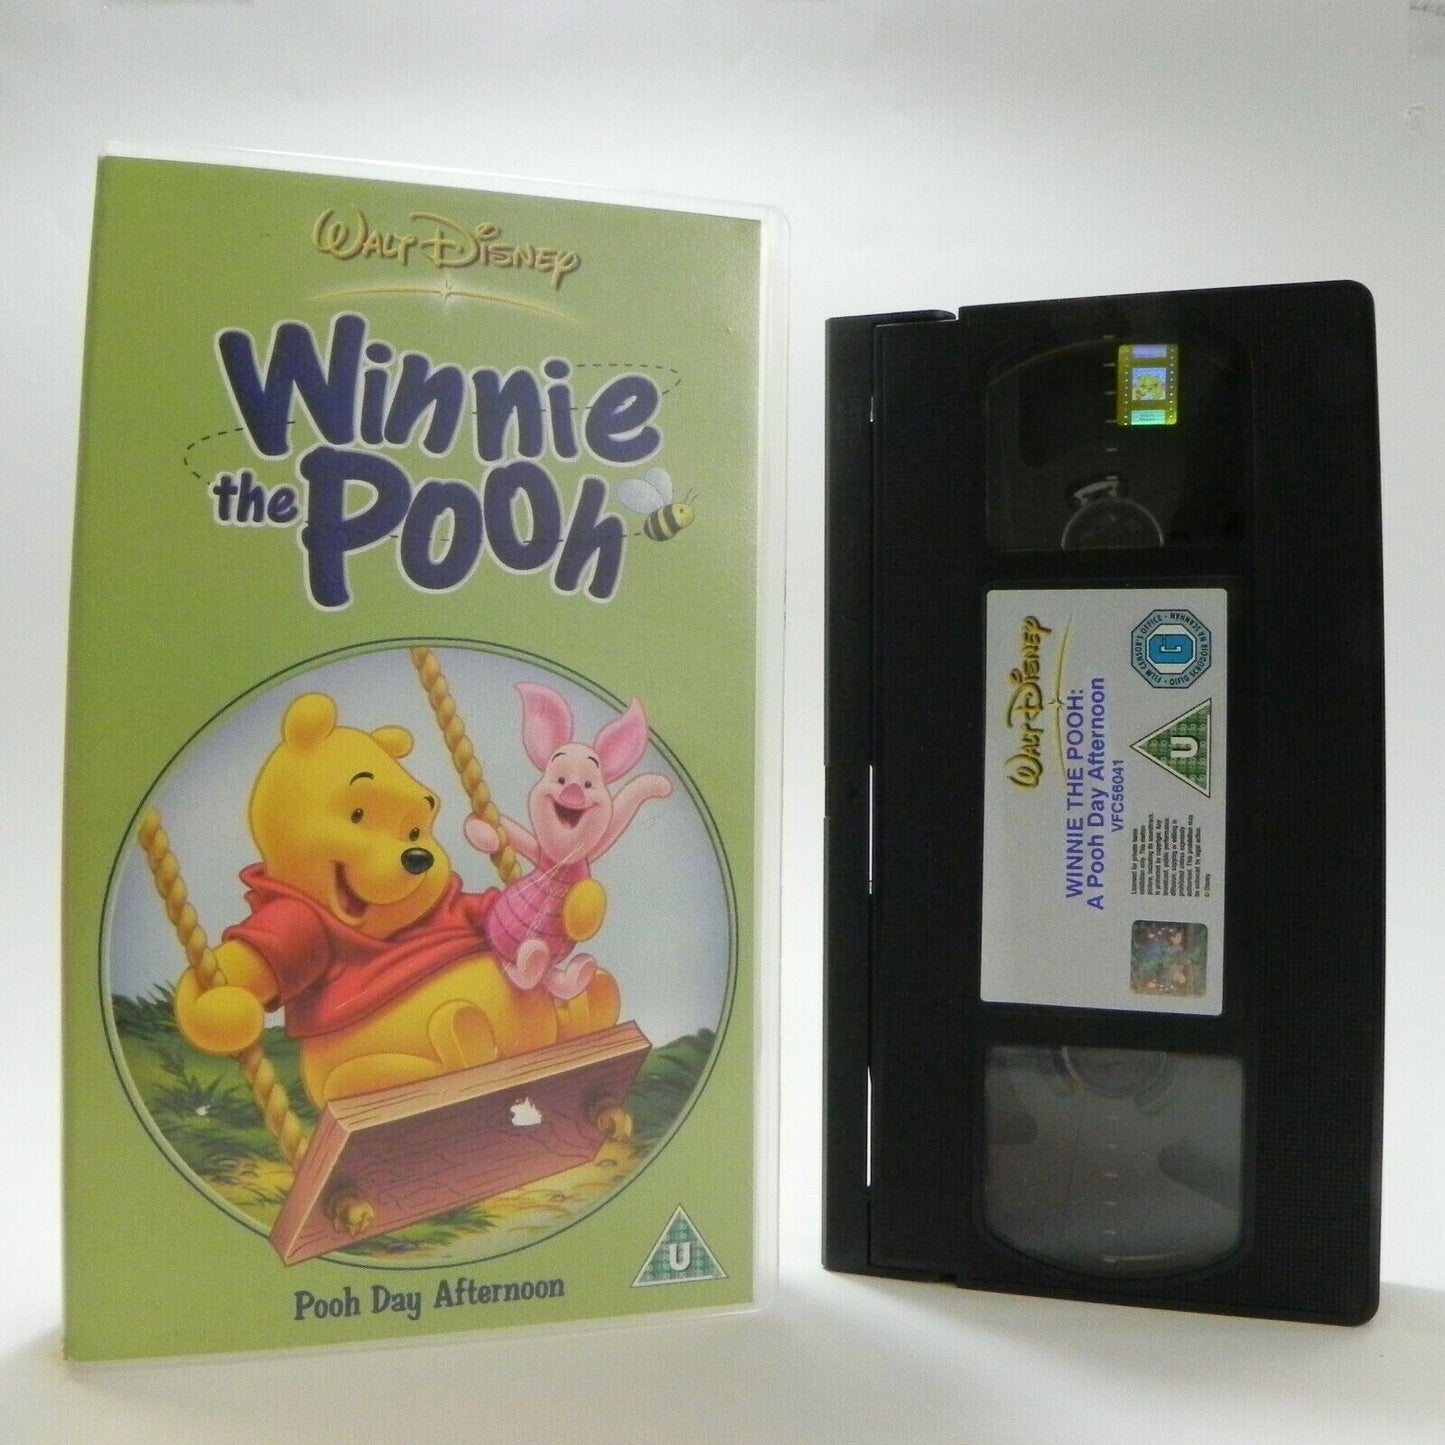 Winnie The Pooh: Pooh Day Afternoon - Walt Disney - Animated - Kids - Pal VHS-